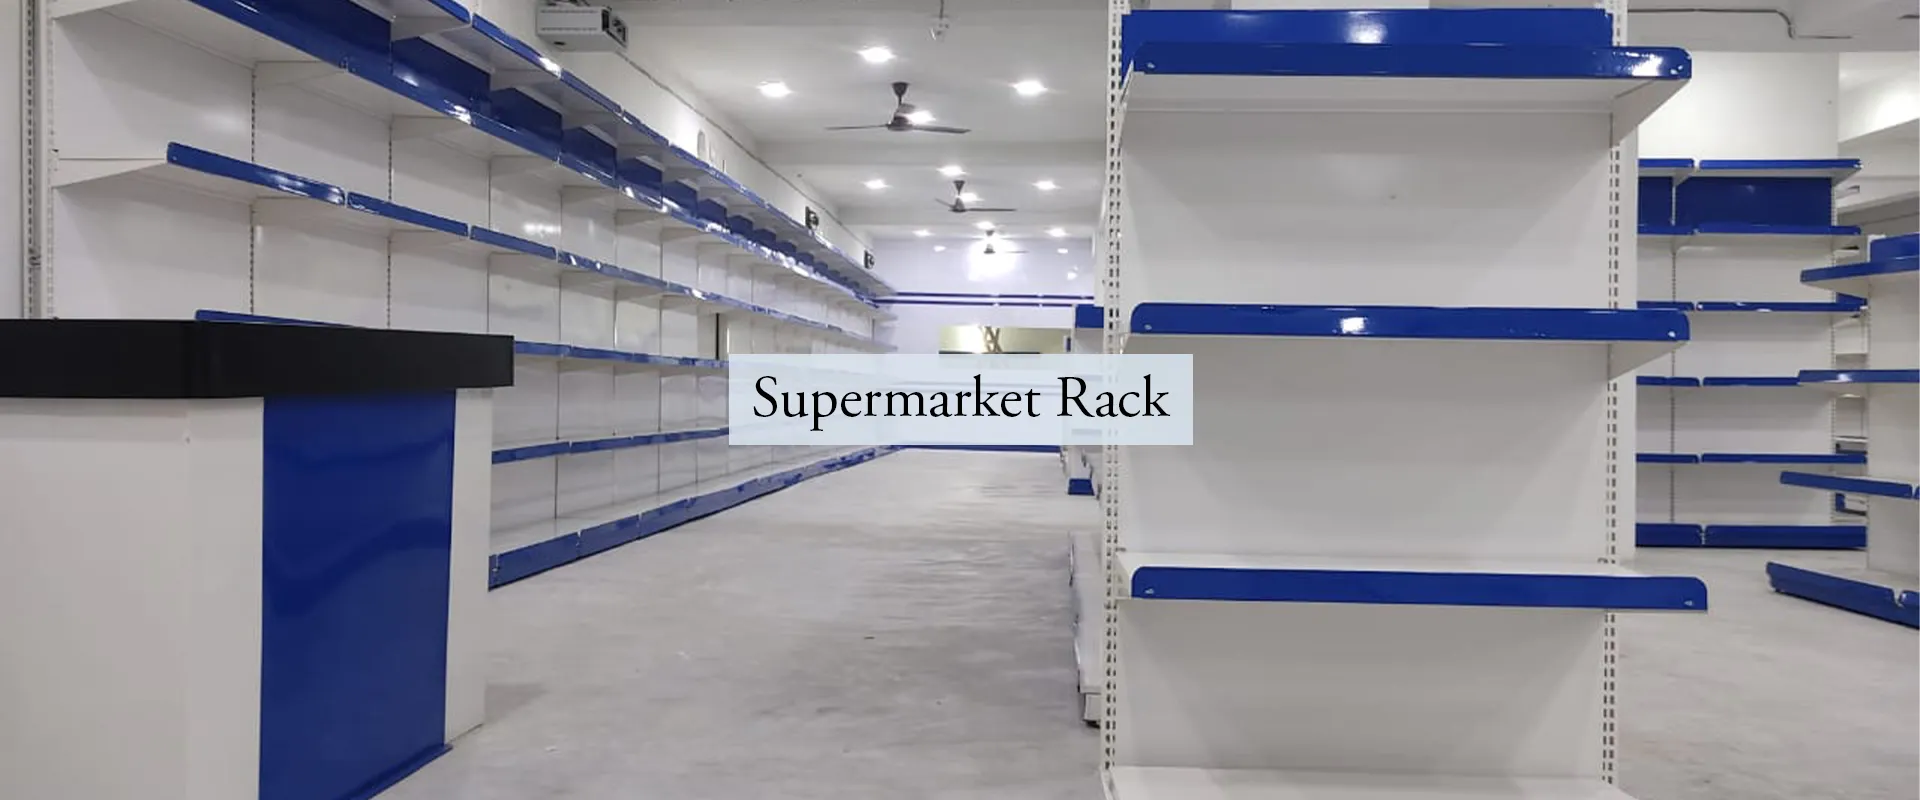 Supermarket Rack In Doraha